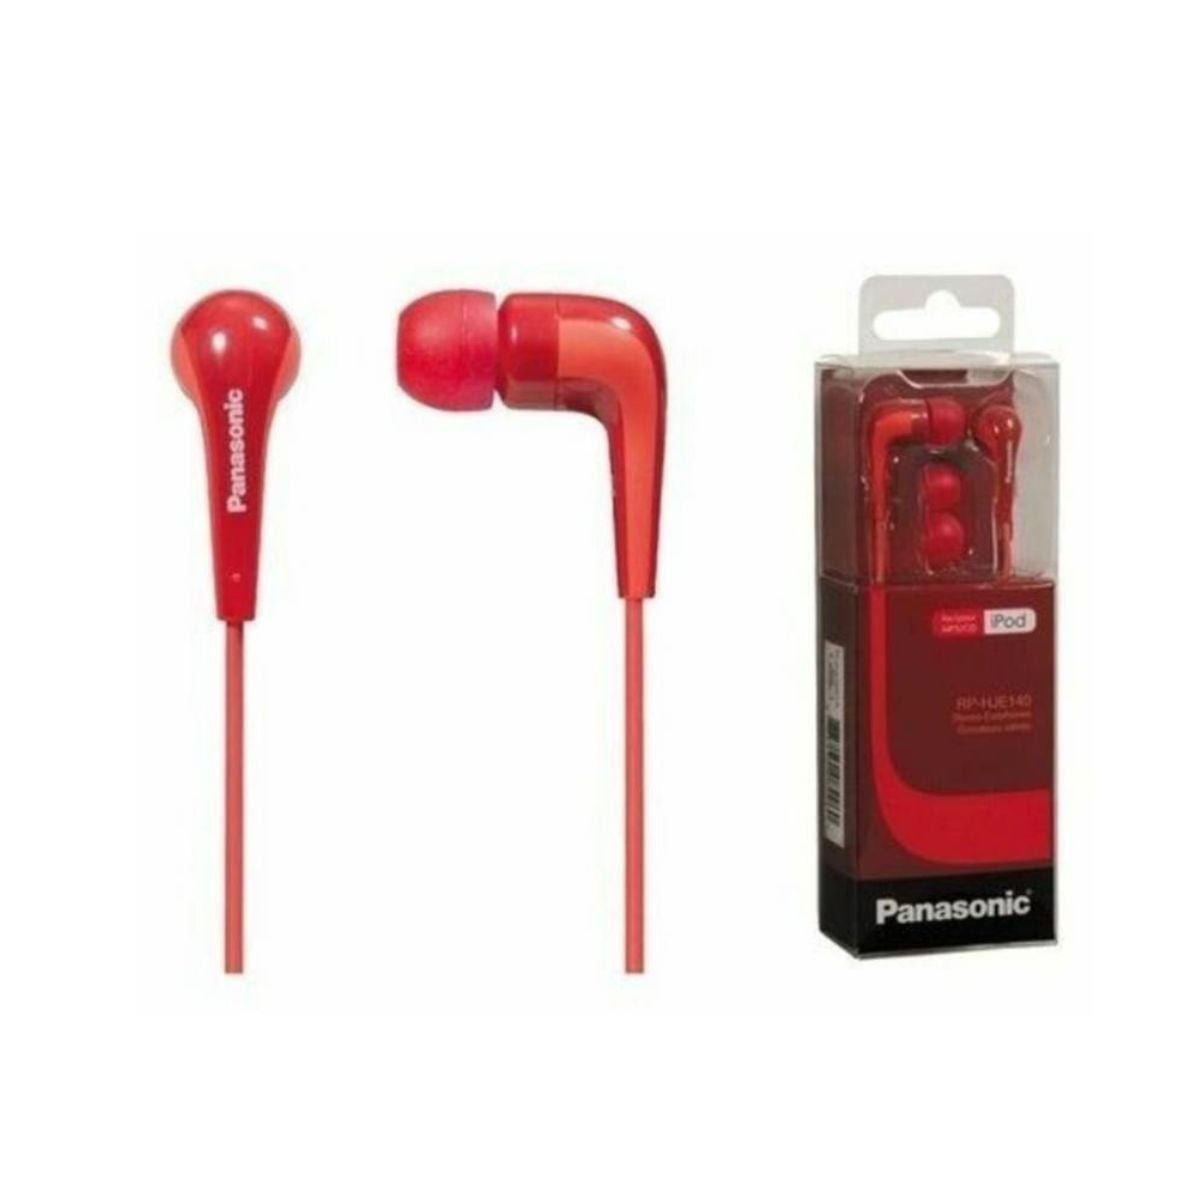 Audifono Panasonic Rp-Hje140 Rojo